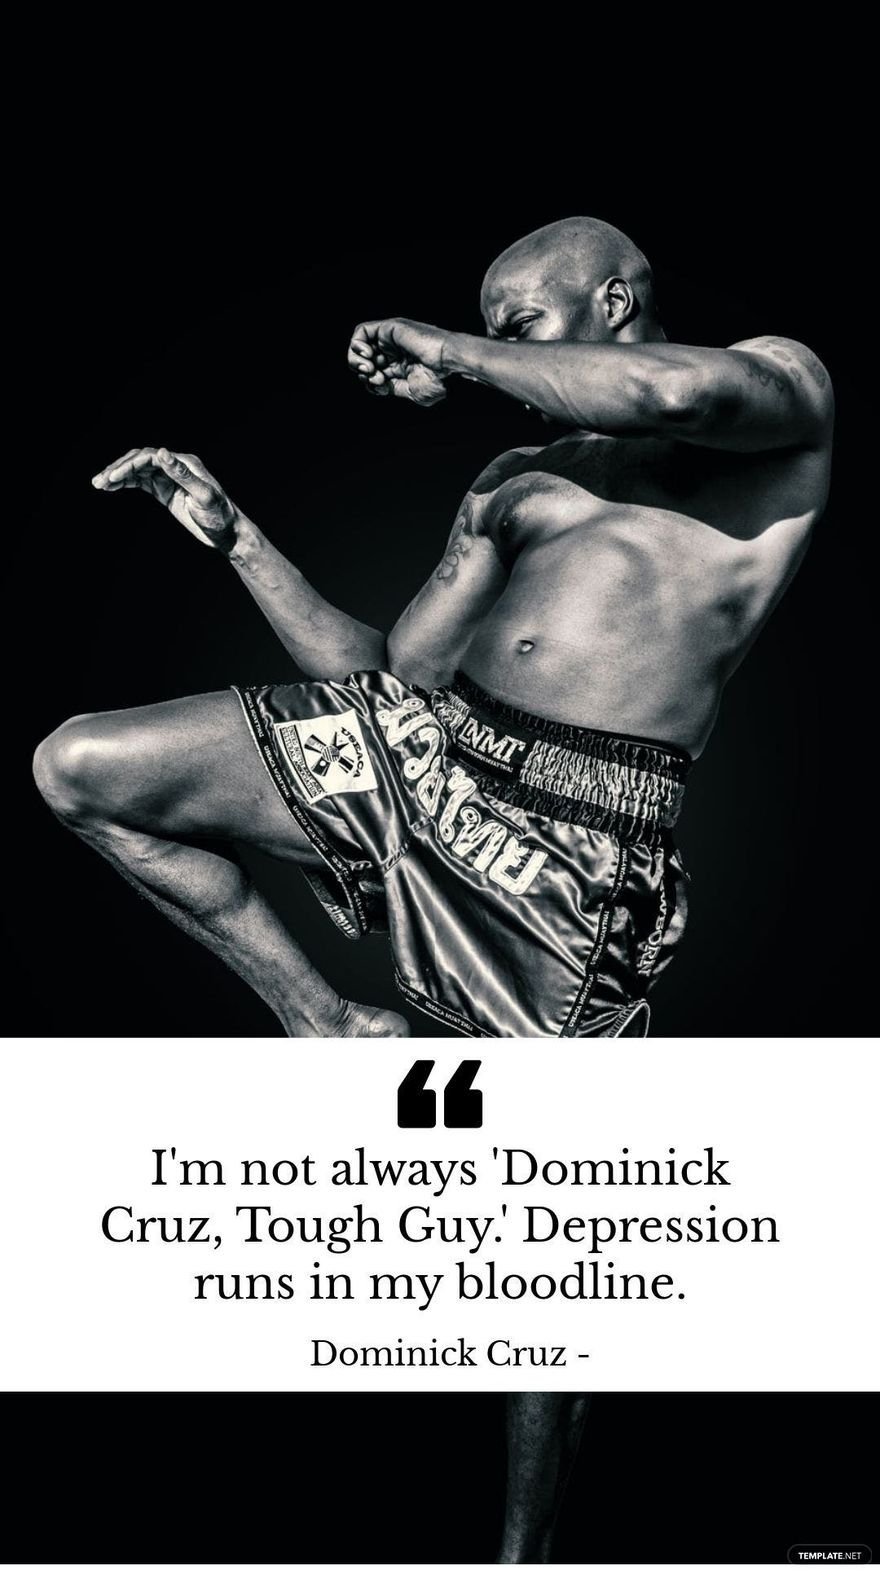 Dominick Cruz - I'm not always 'Dominick Cruz, Tough Guy.' Depression runs in my bloodline.